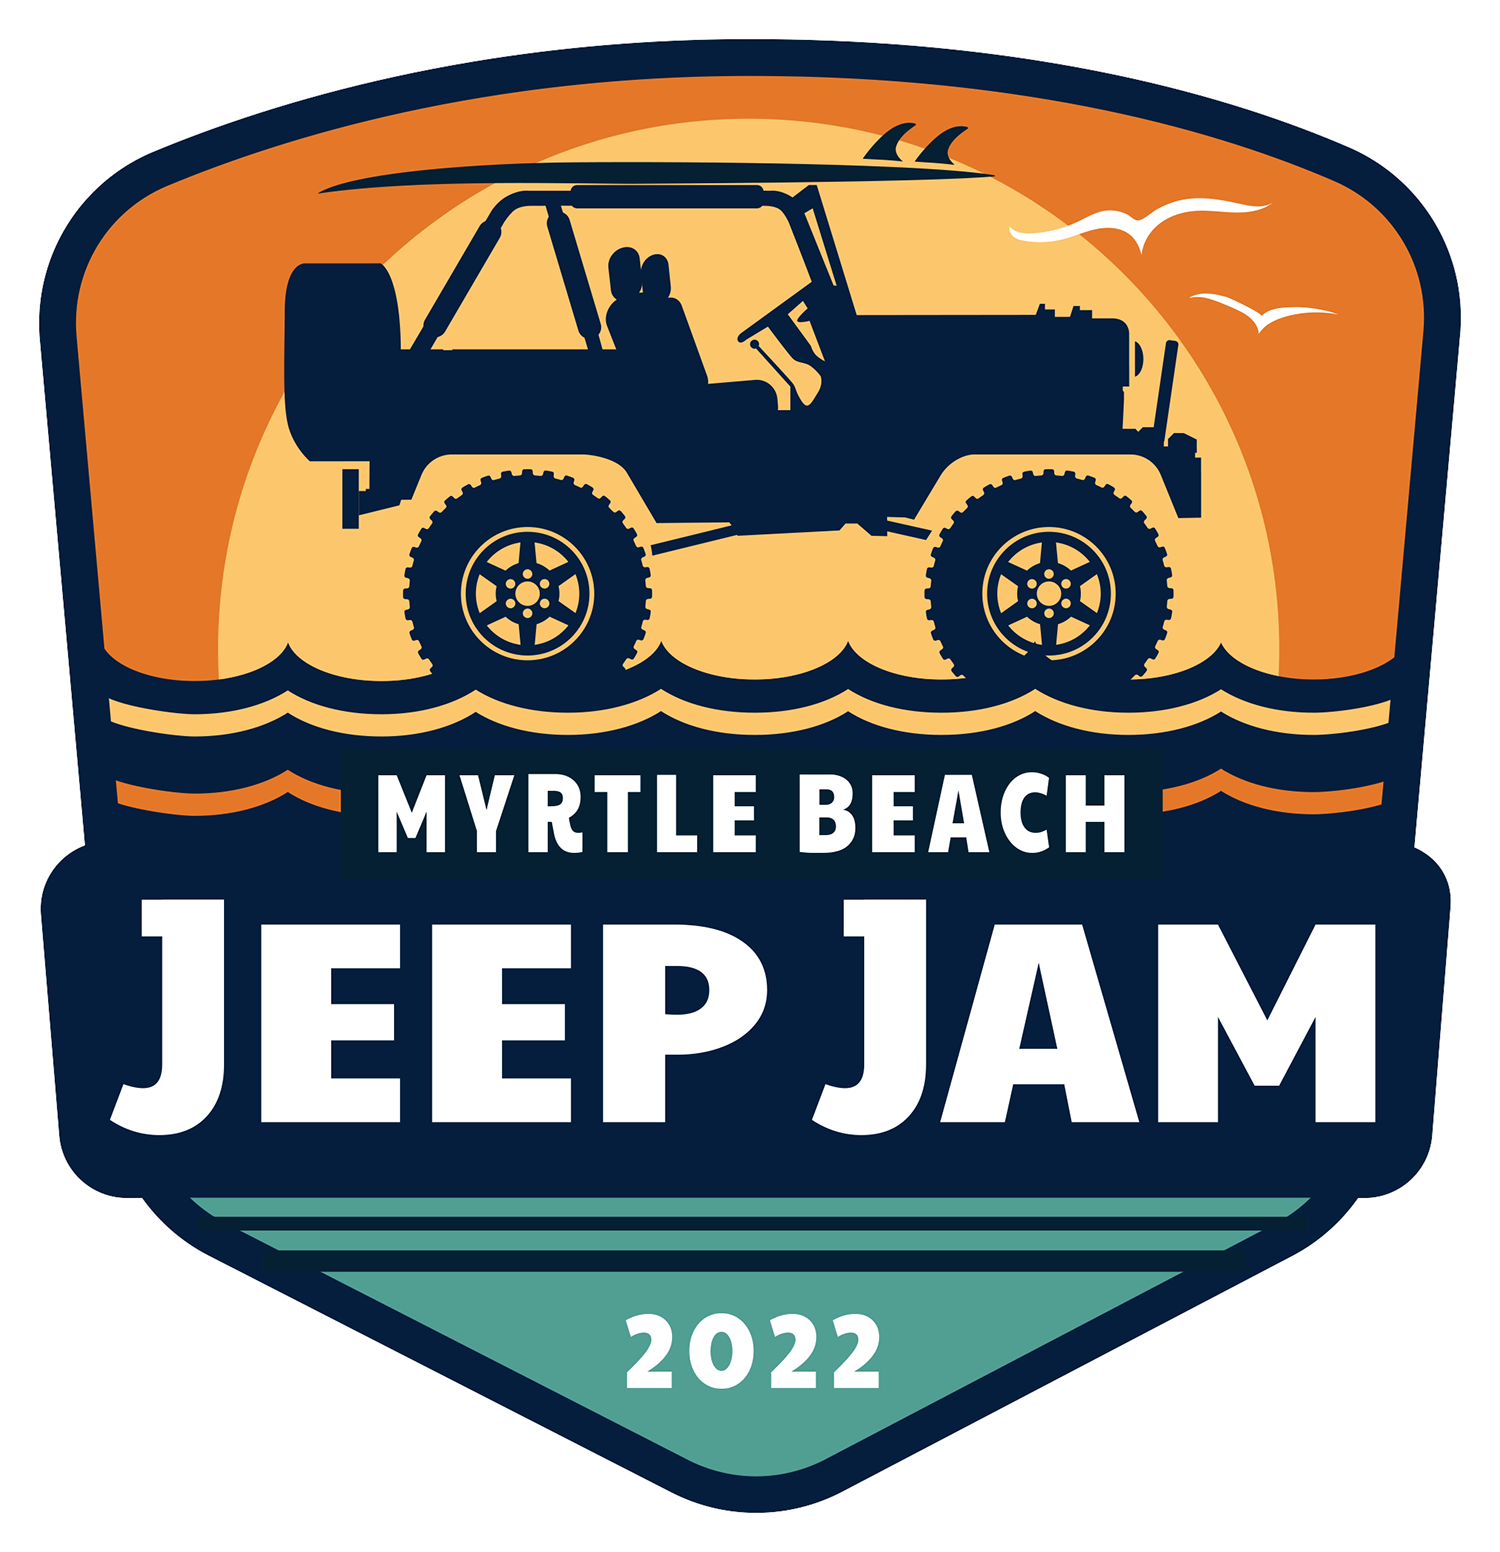 Myrtle Beach Jeep Jam